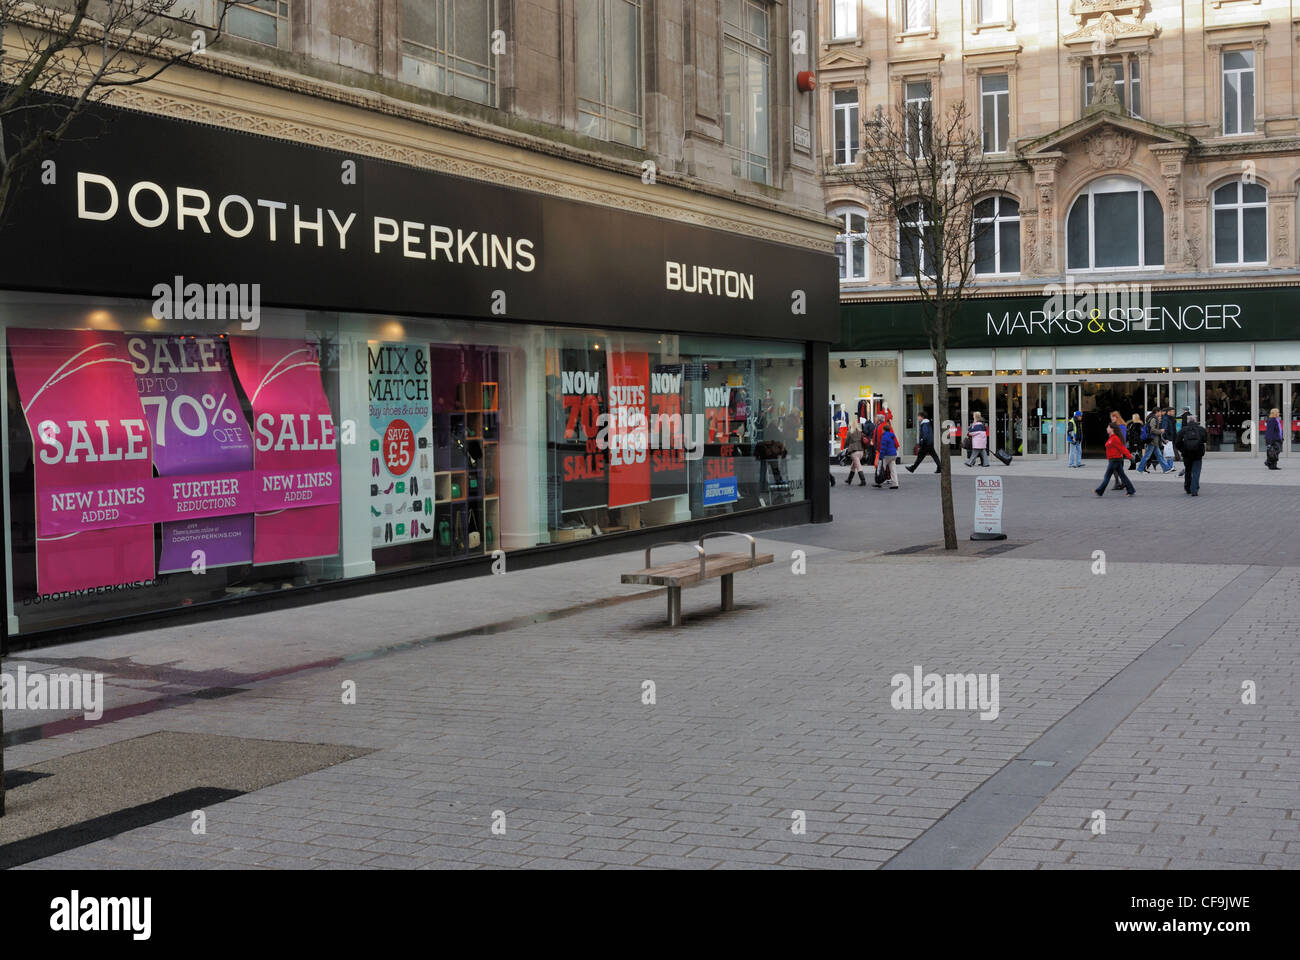 Dorothy Perkins & Burtons shop in Liverpool city centre on Church Street  Stock Photo - Alamy